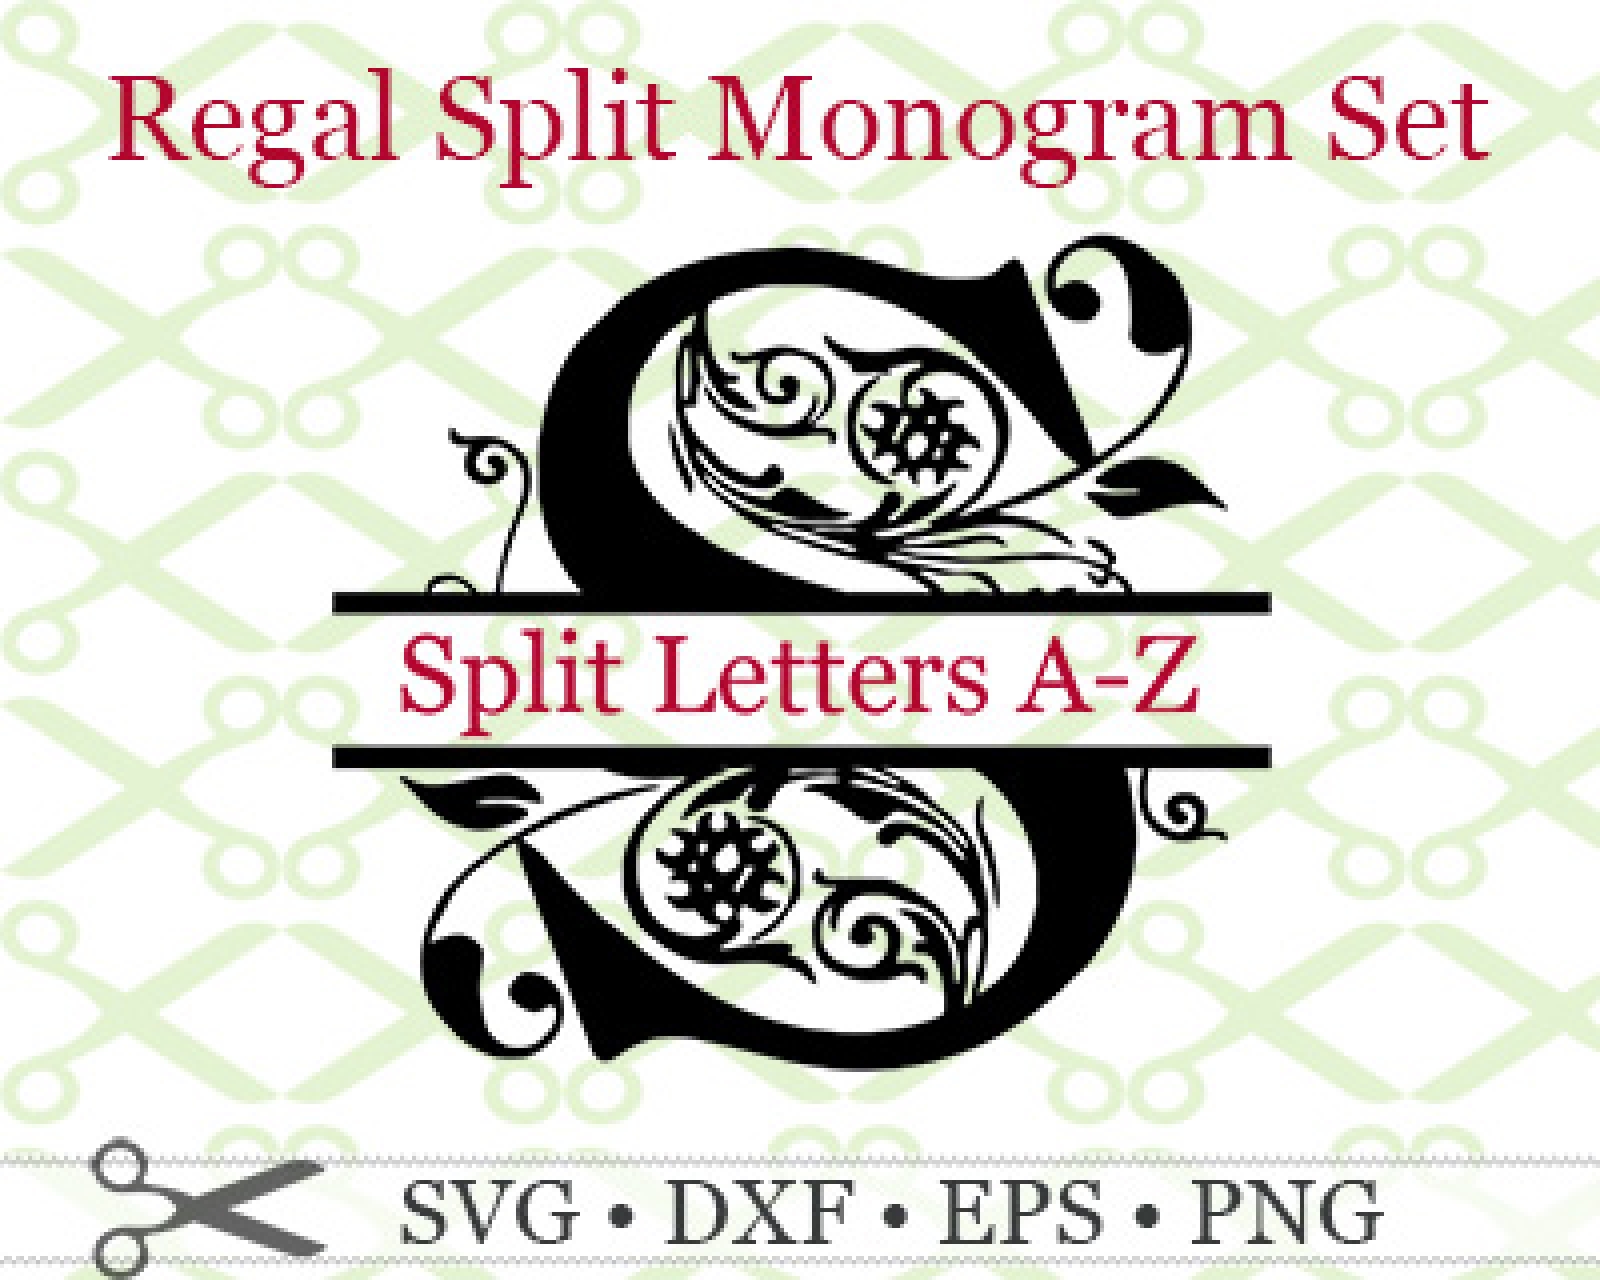 Download REGAL SPLIT MONOGRAM SVG-Cricut & Silhouette Files SVG DXF EPS PNG | MONOGRAMSVG.COM by SVG Designs